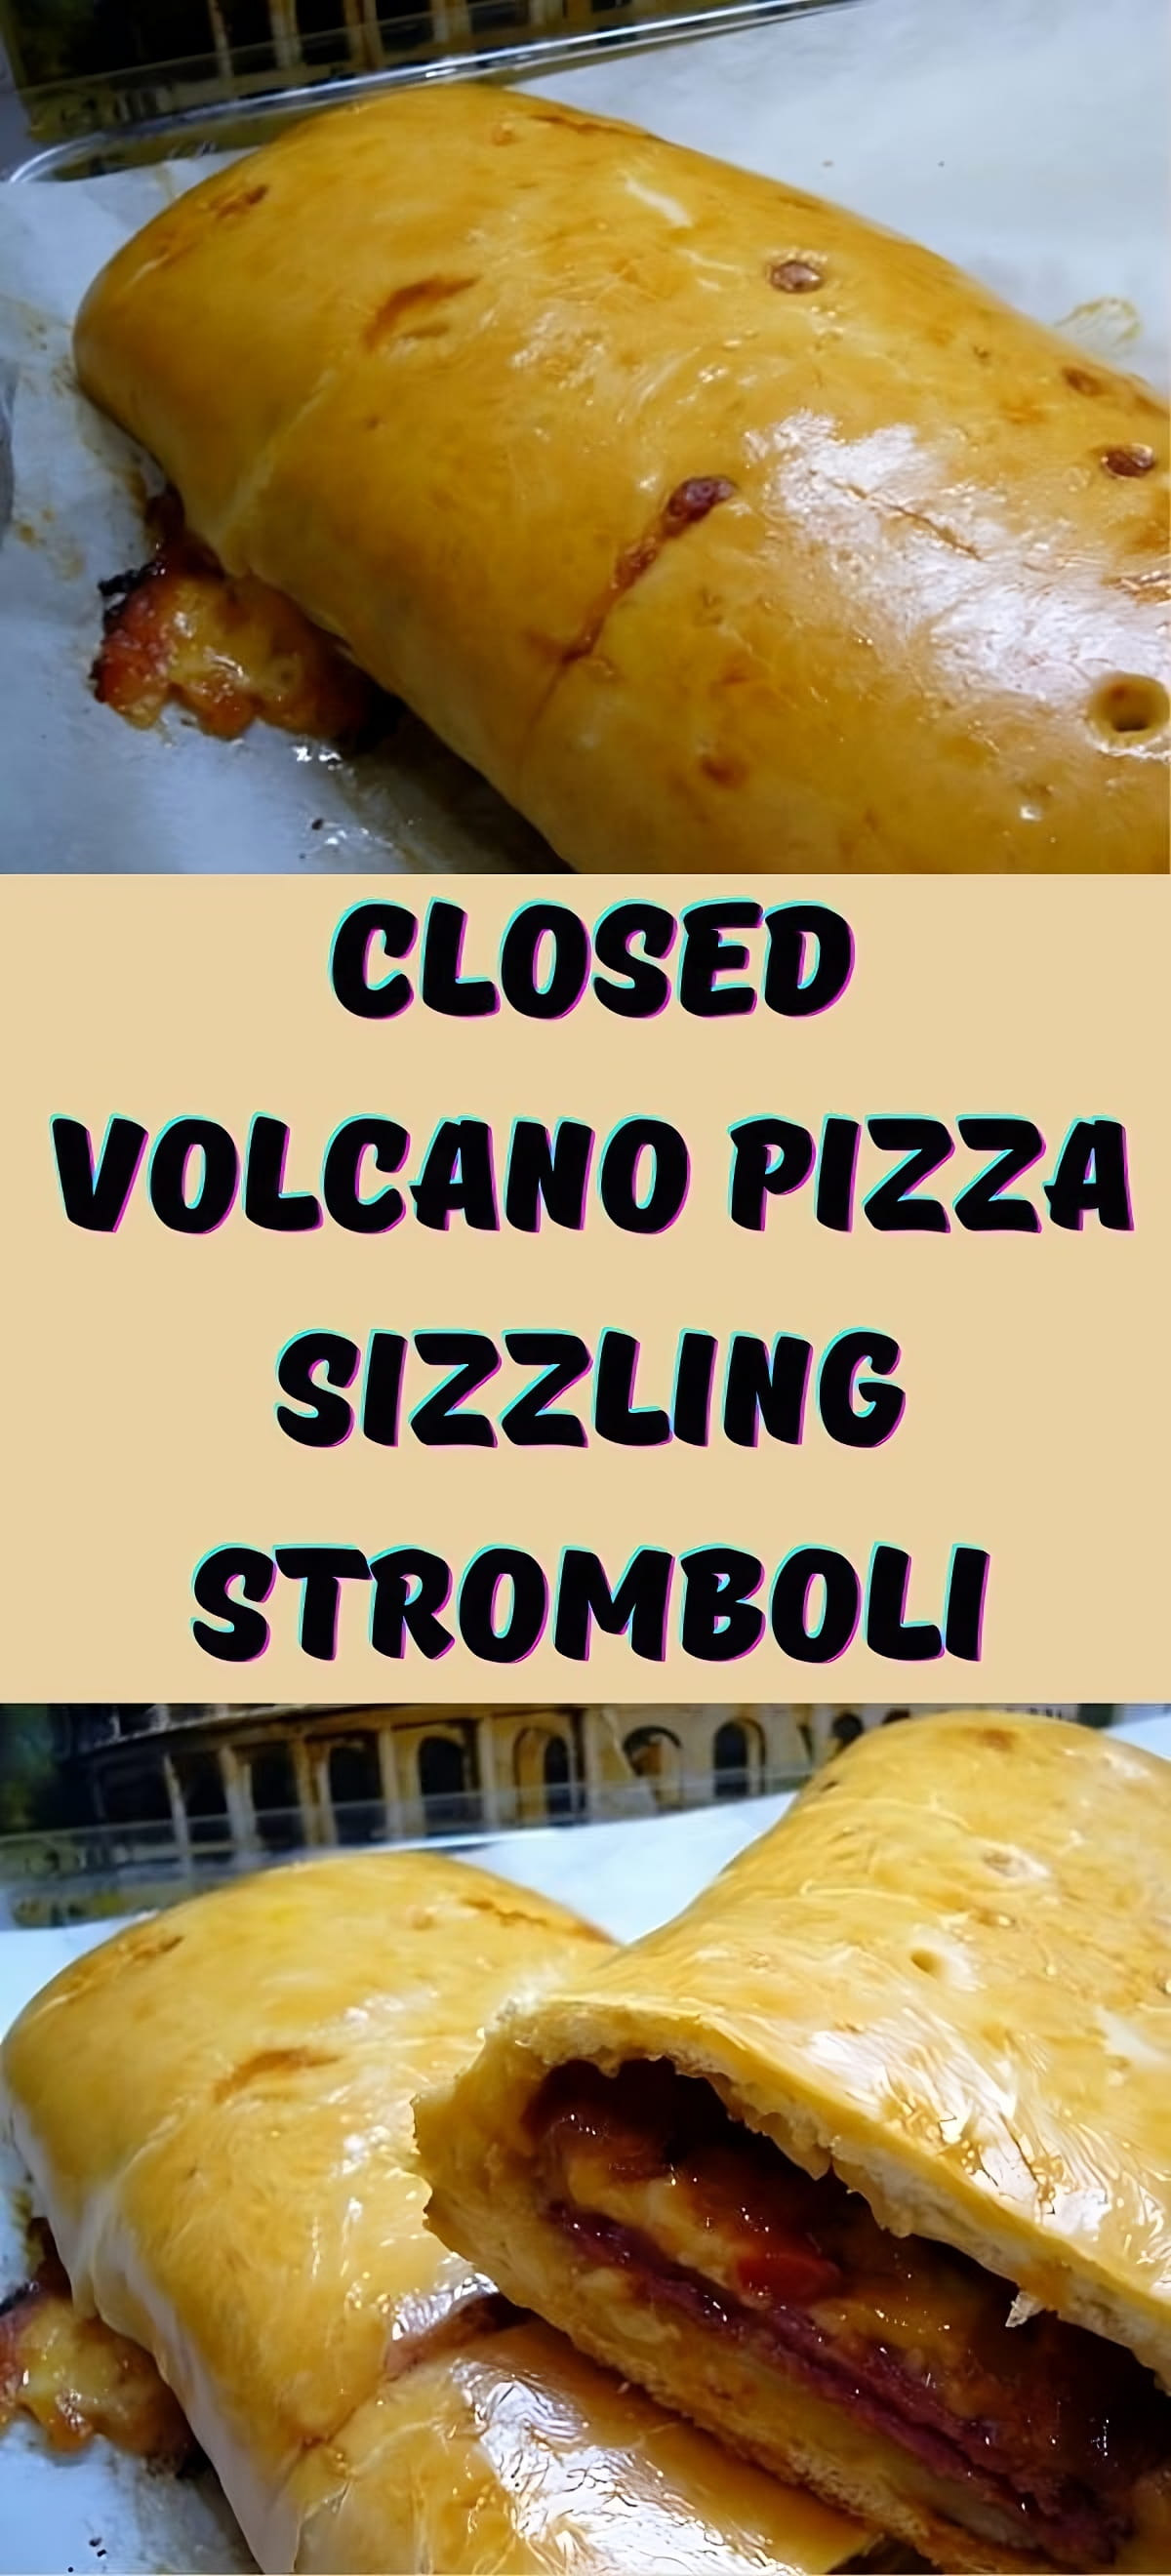 Closed volcano pizza Sizzling Stromboli